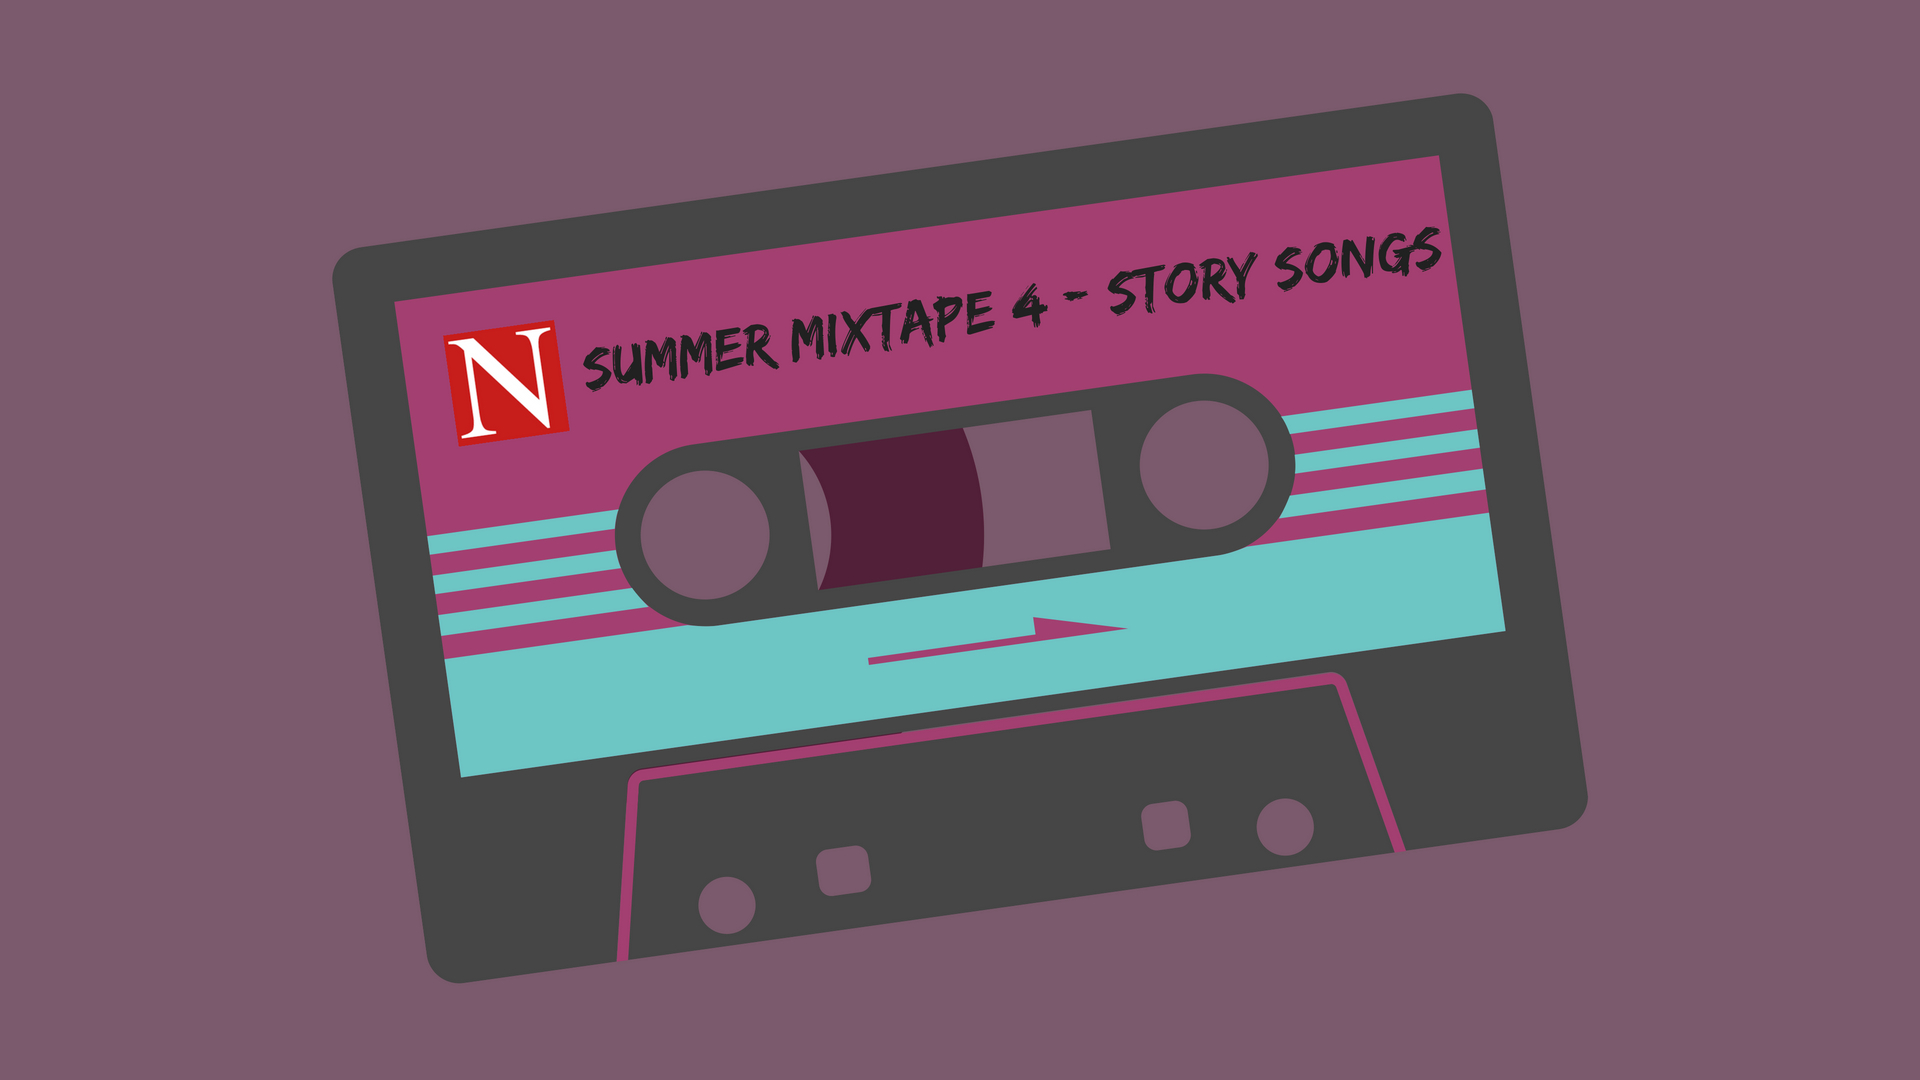 Summer Mixtape # 4 – Story Songs